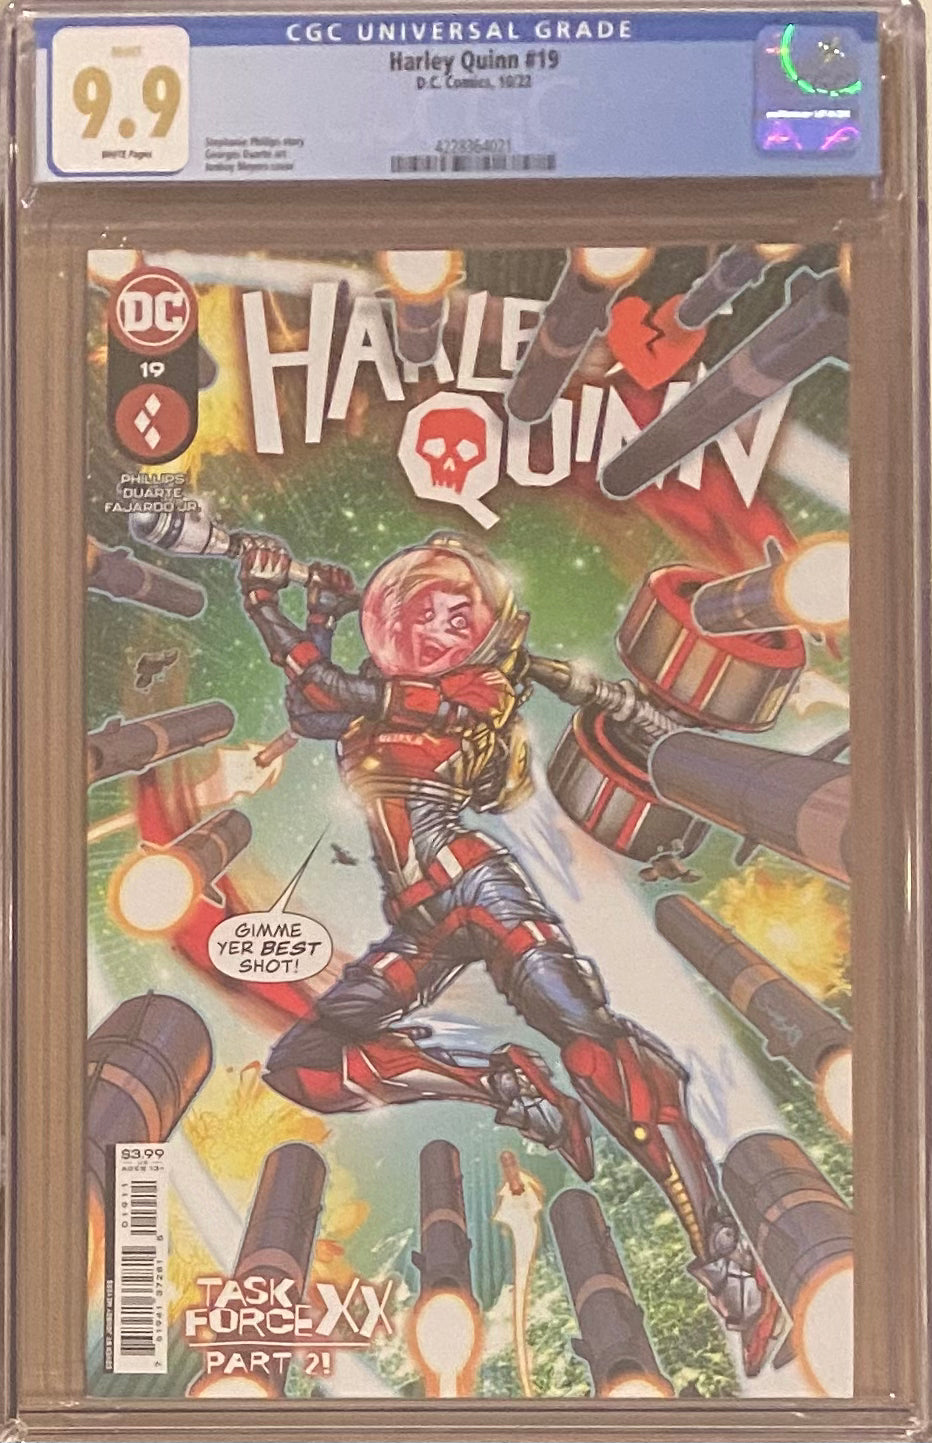 Harley Quinn #19 CGC 9.9